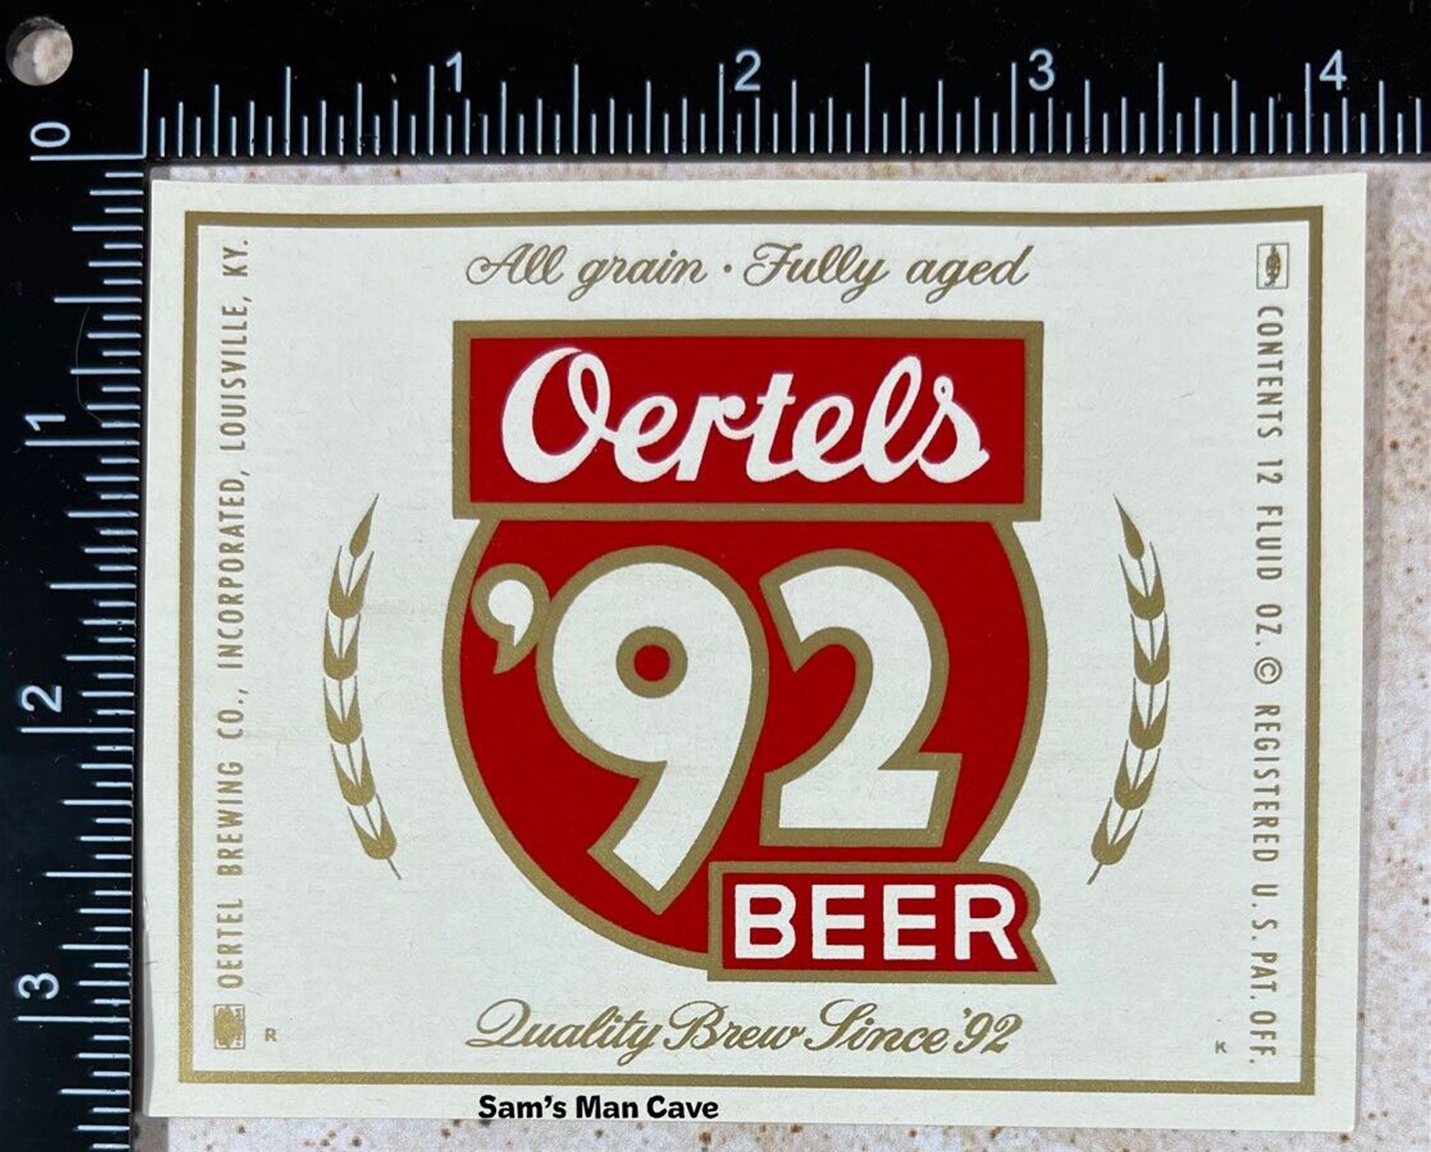 Oertels '92 Beer Label